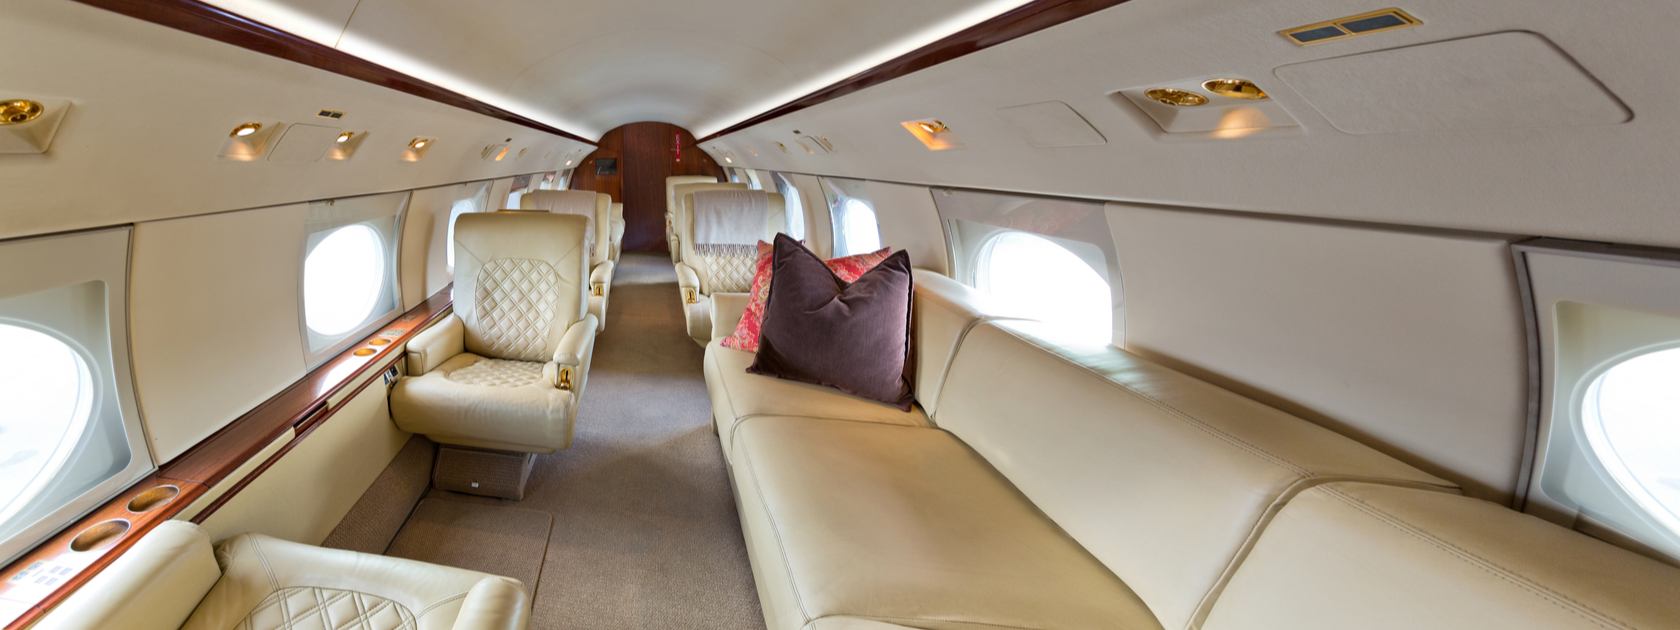 cool private jet interiors